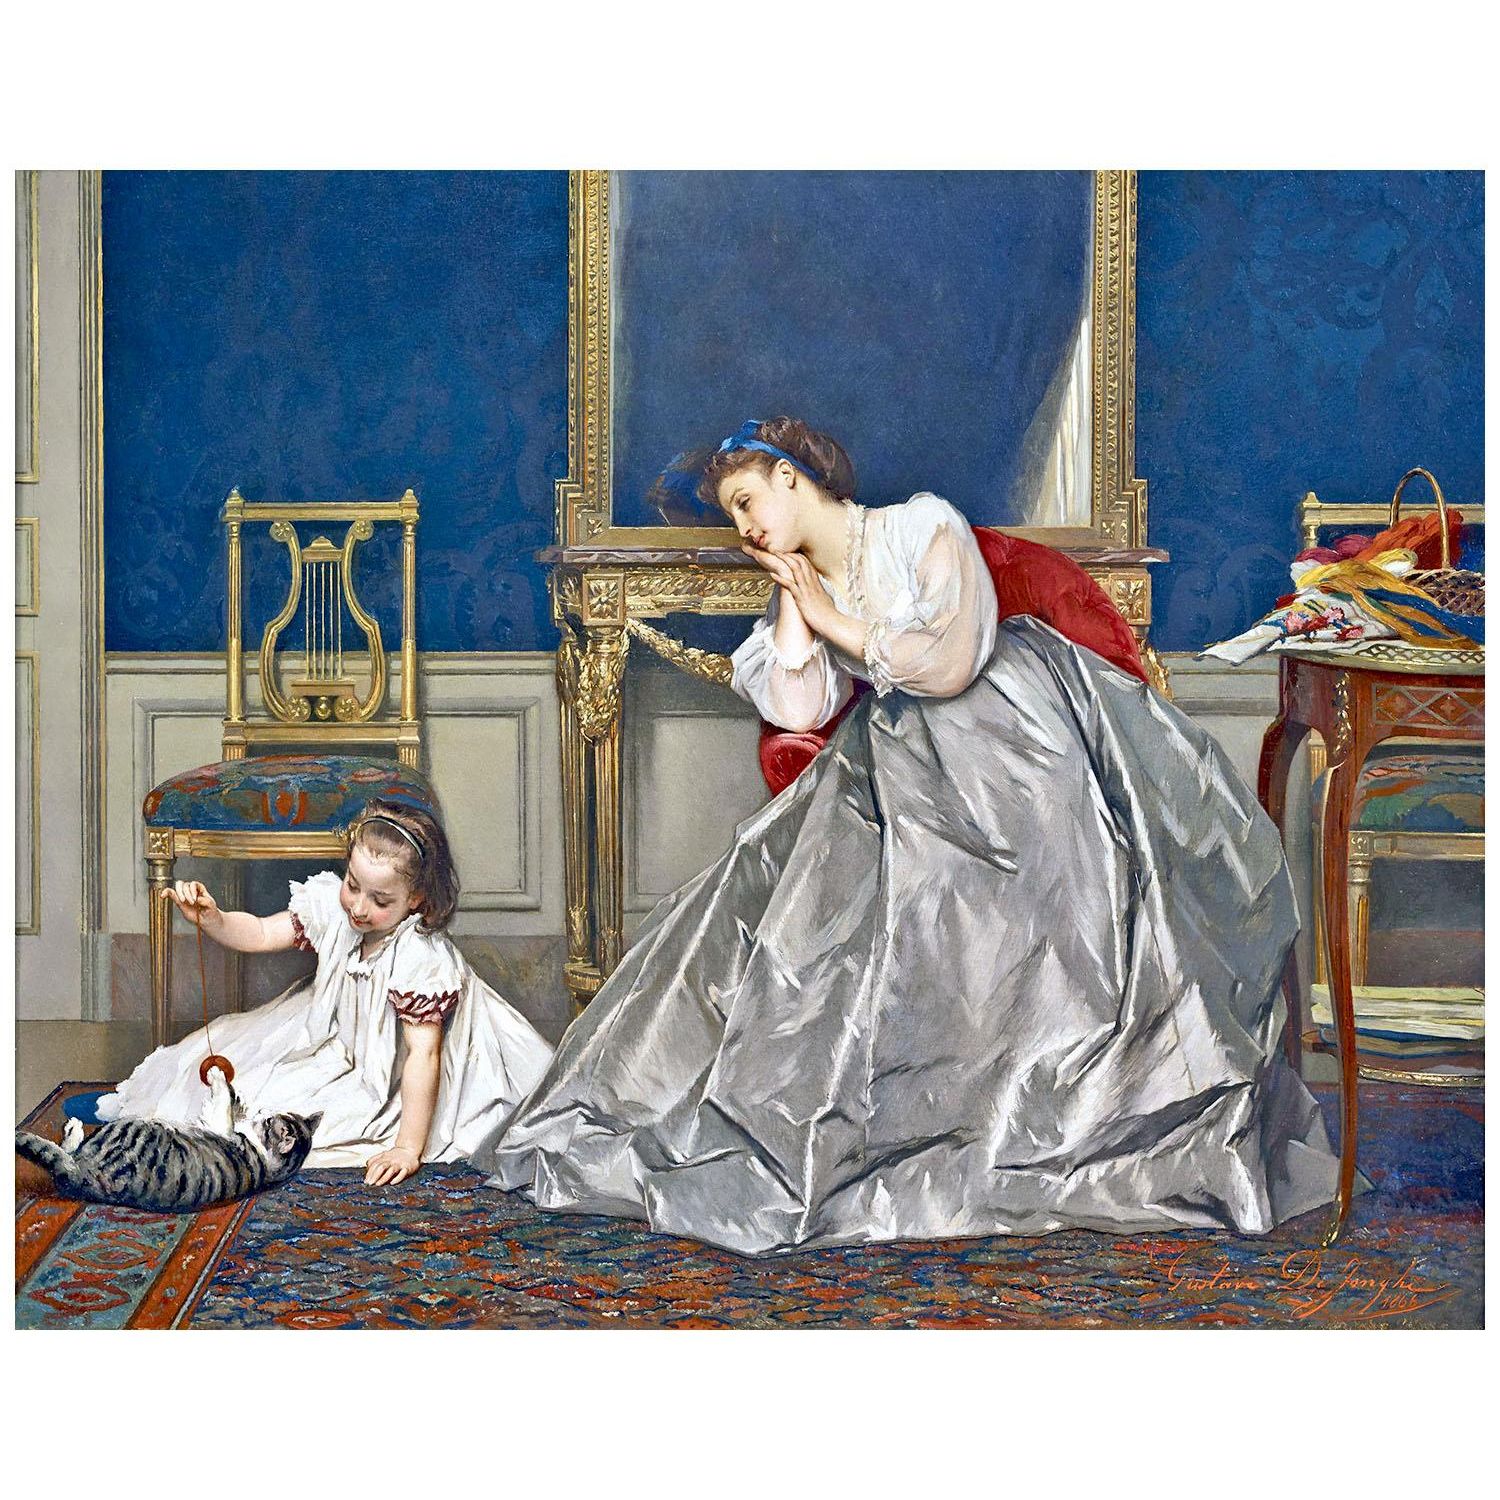 Gustave De Jonghe. Divertissement. 1866. Ary Jan Gallery Paris